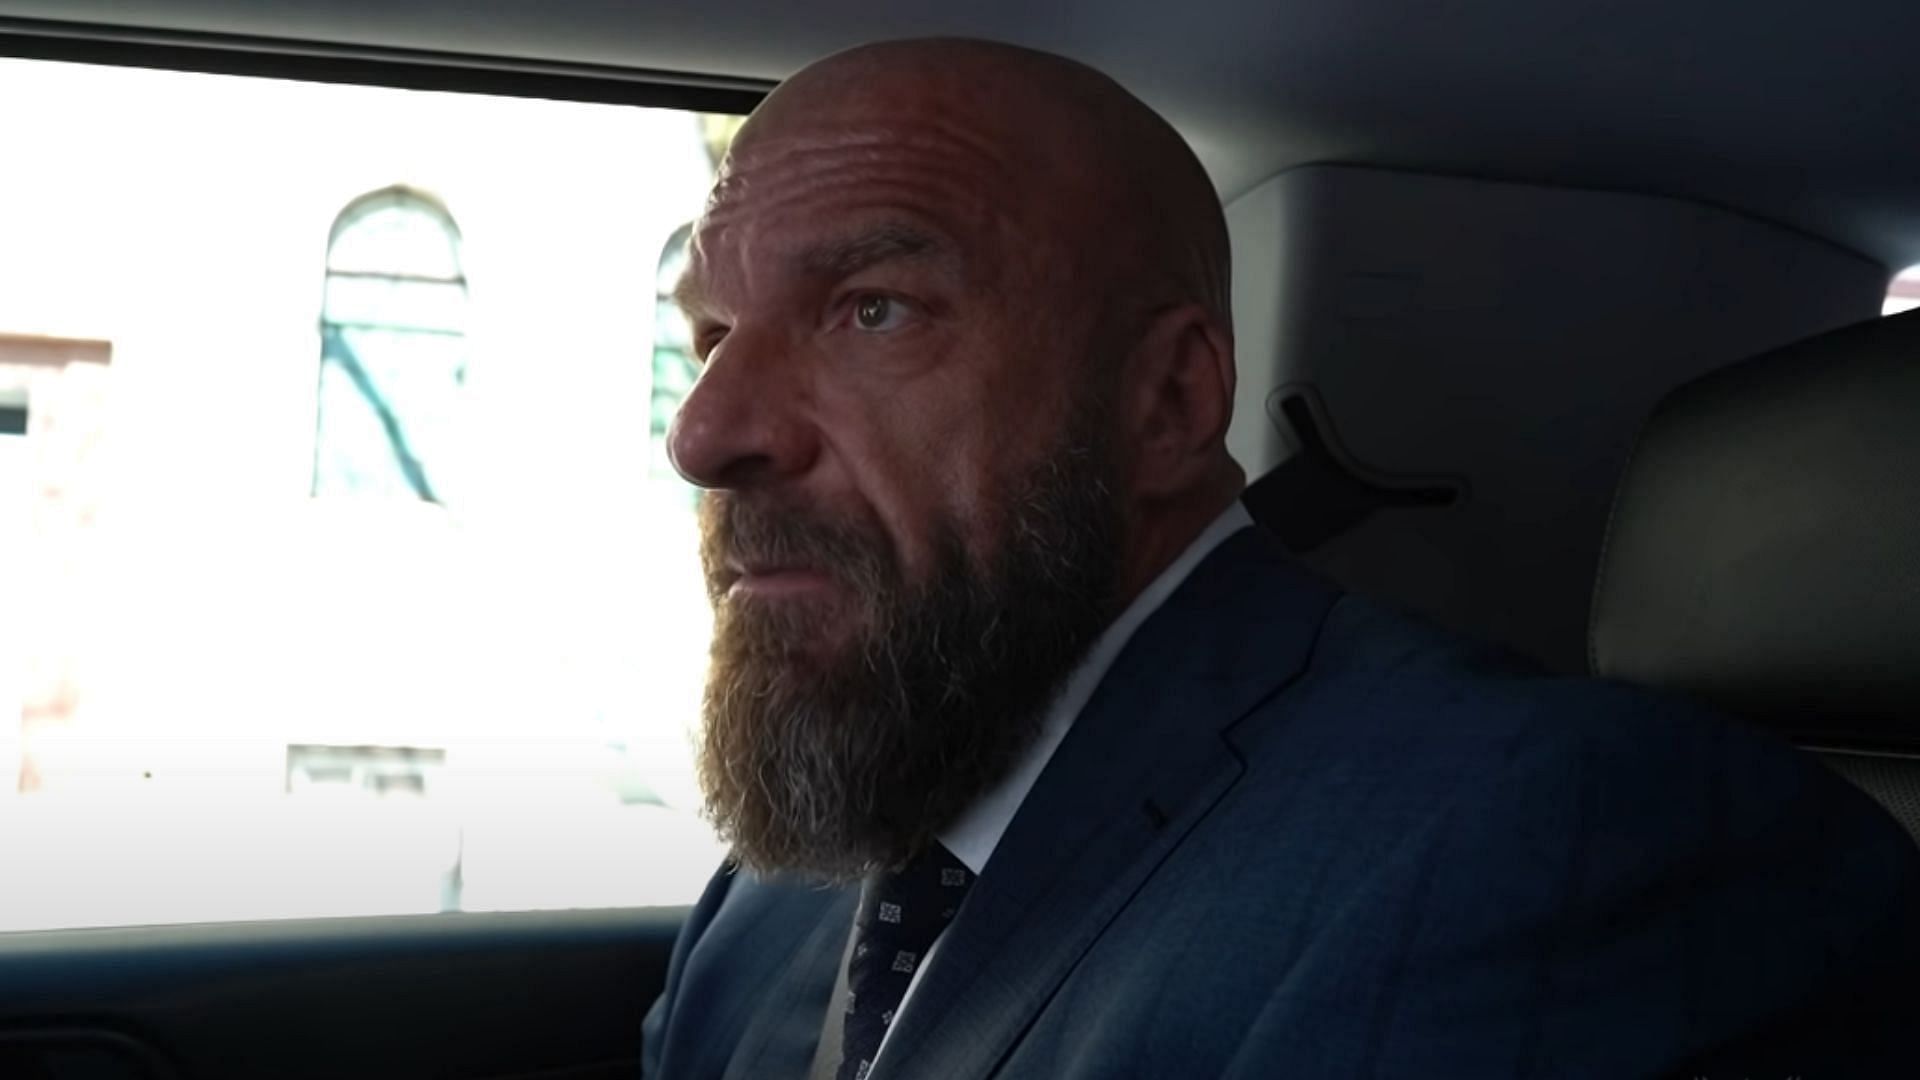 Triple H became WWE